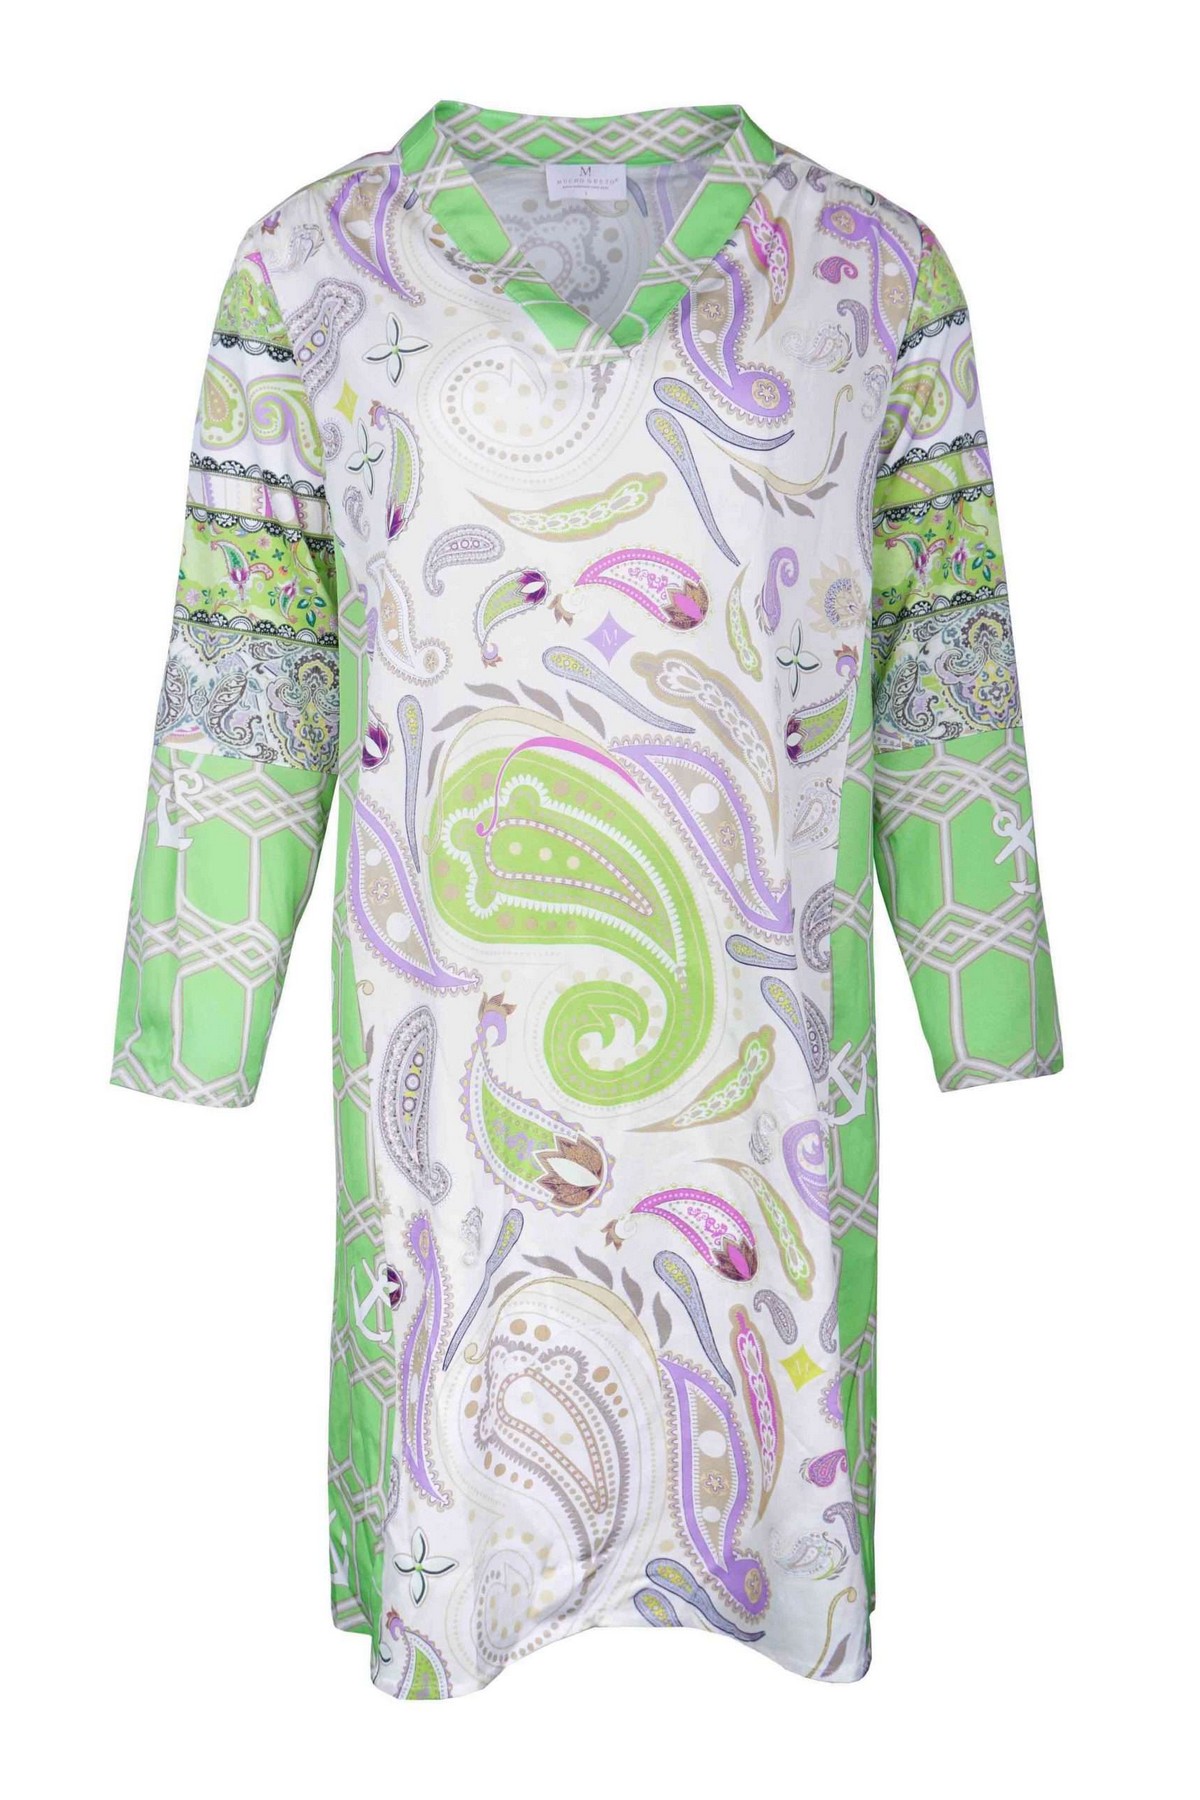 Mucho Gusto - Dress Palau 103 - Kleed kort print V paisley lila groen